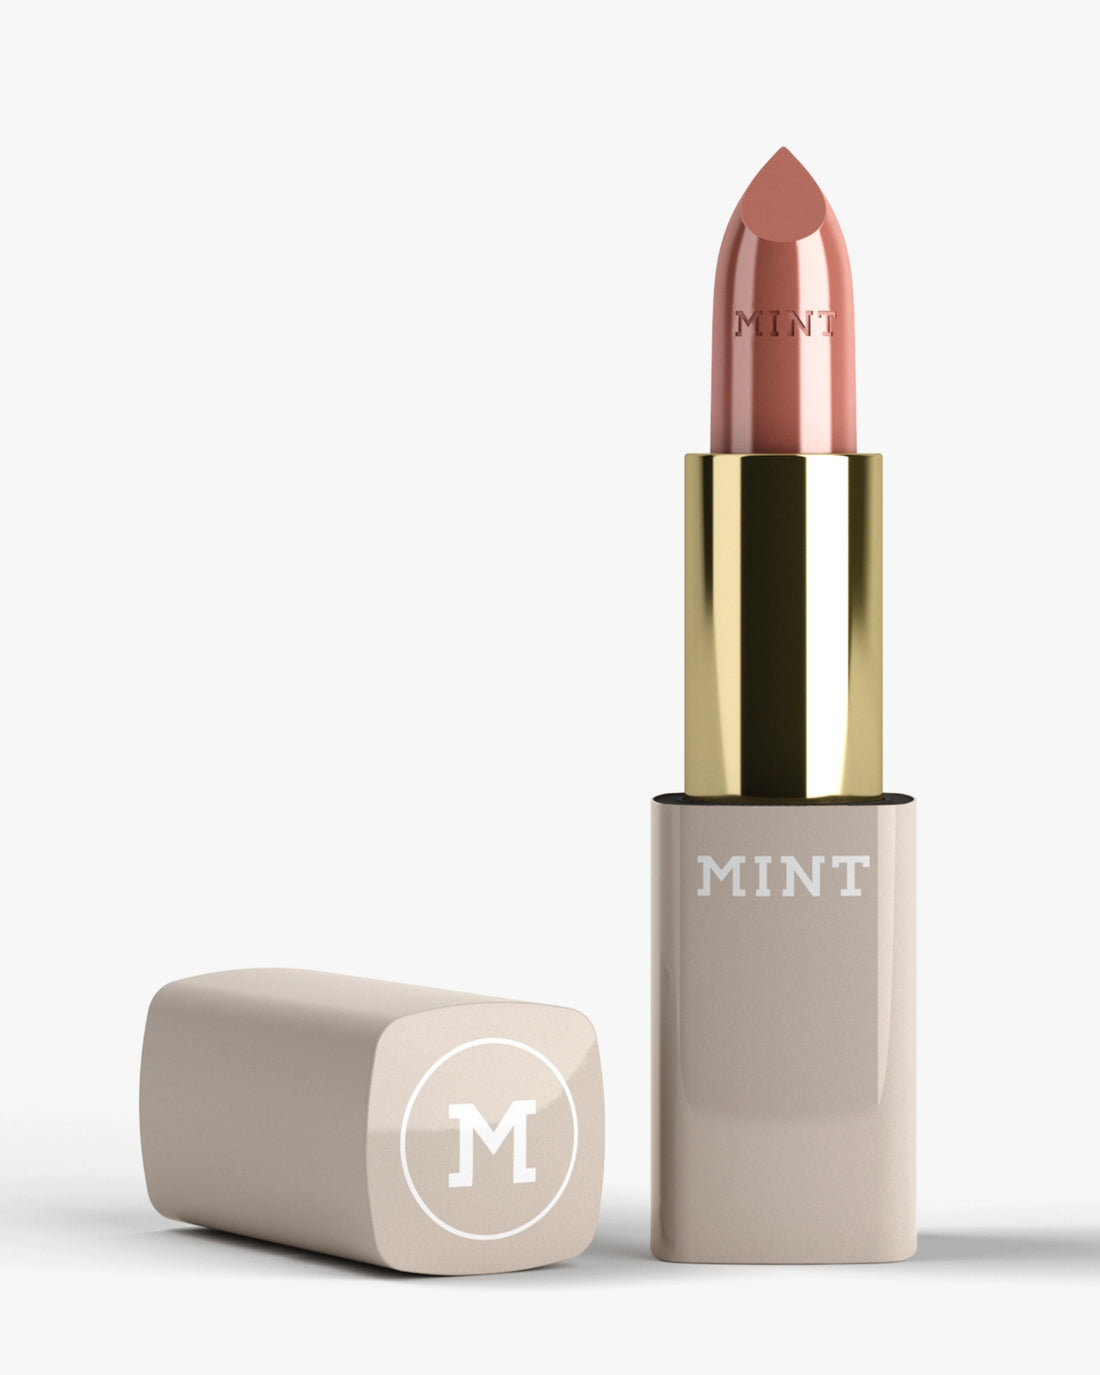 MINT Lippenstift: Produktfoto, Nude Apricot